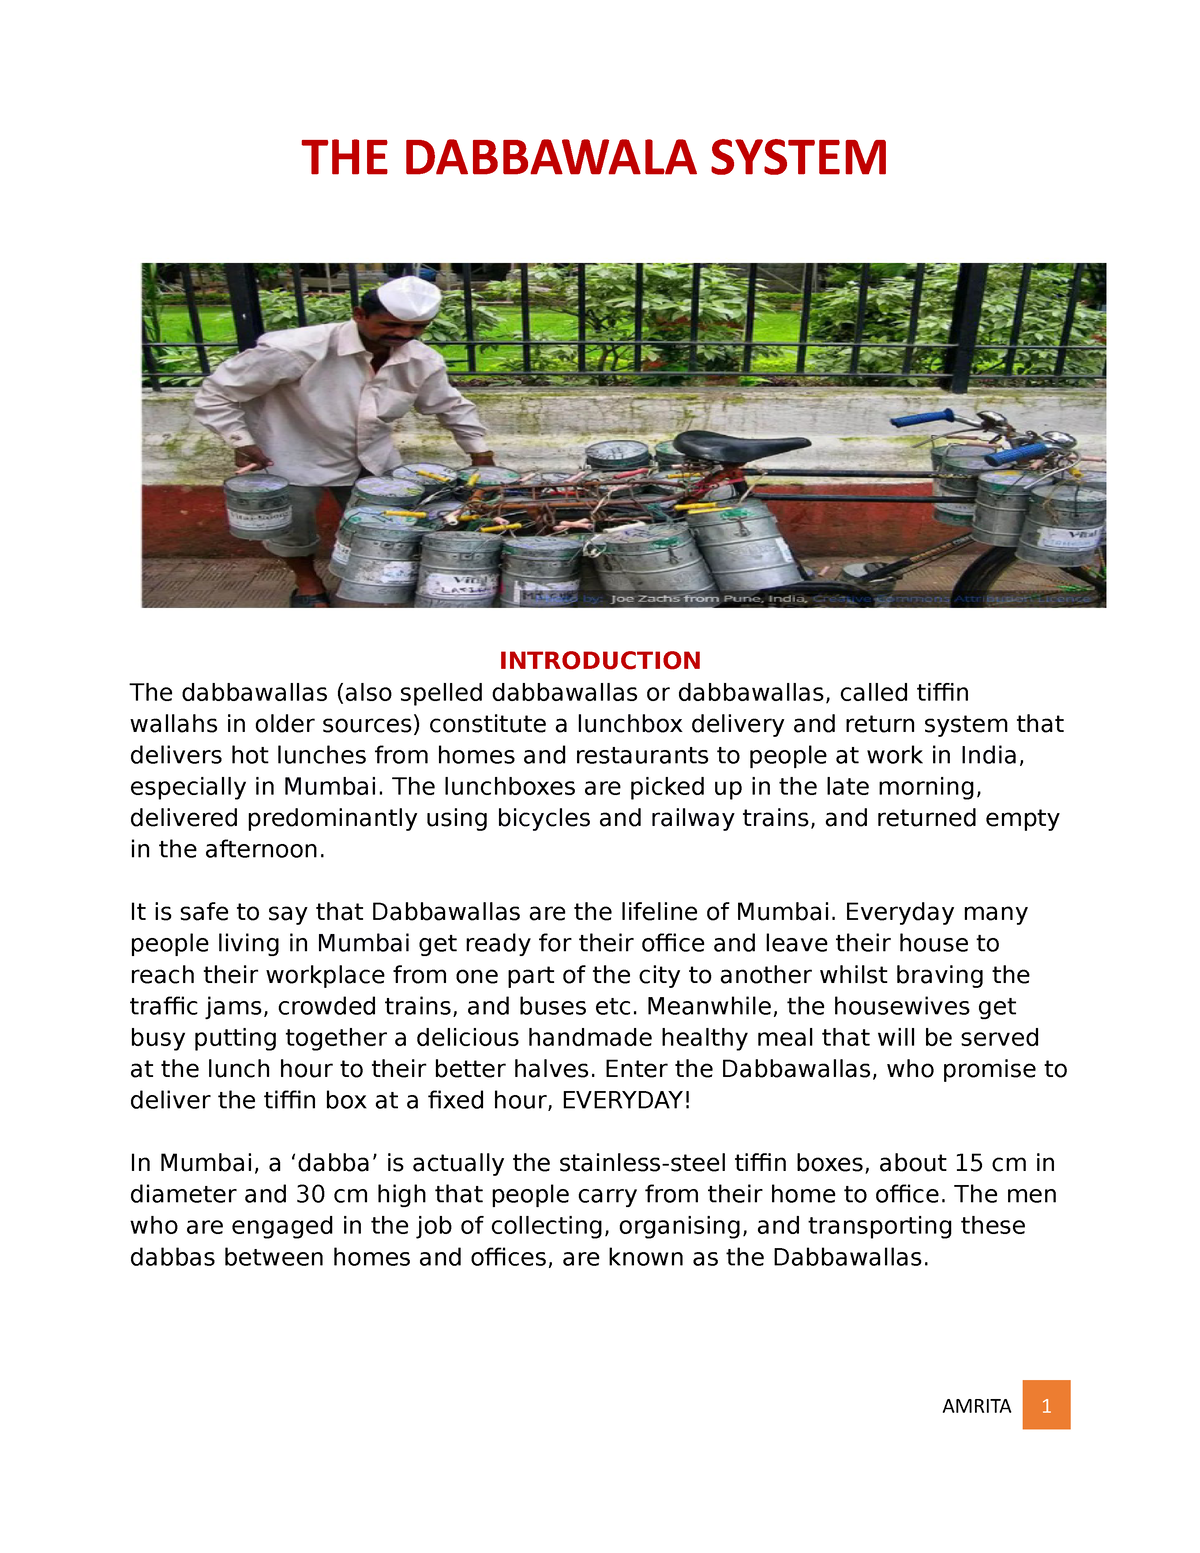 harvard case study on dabbawala